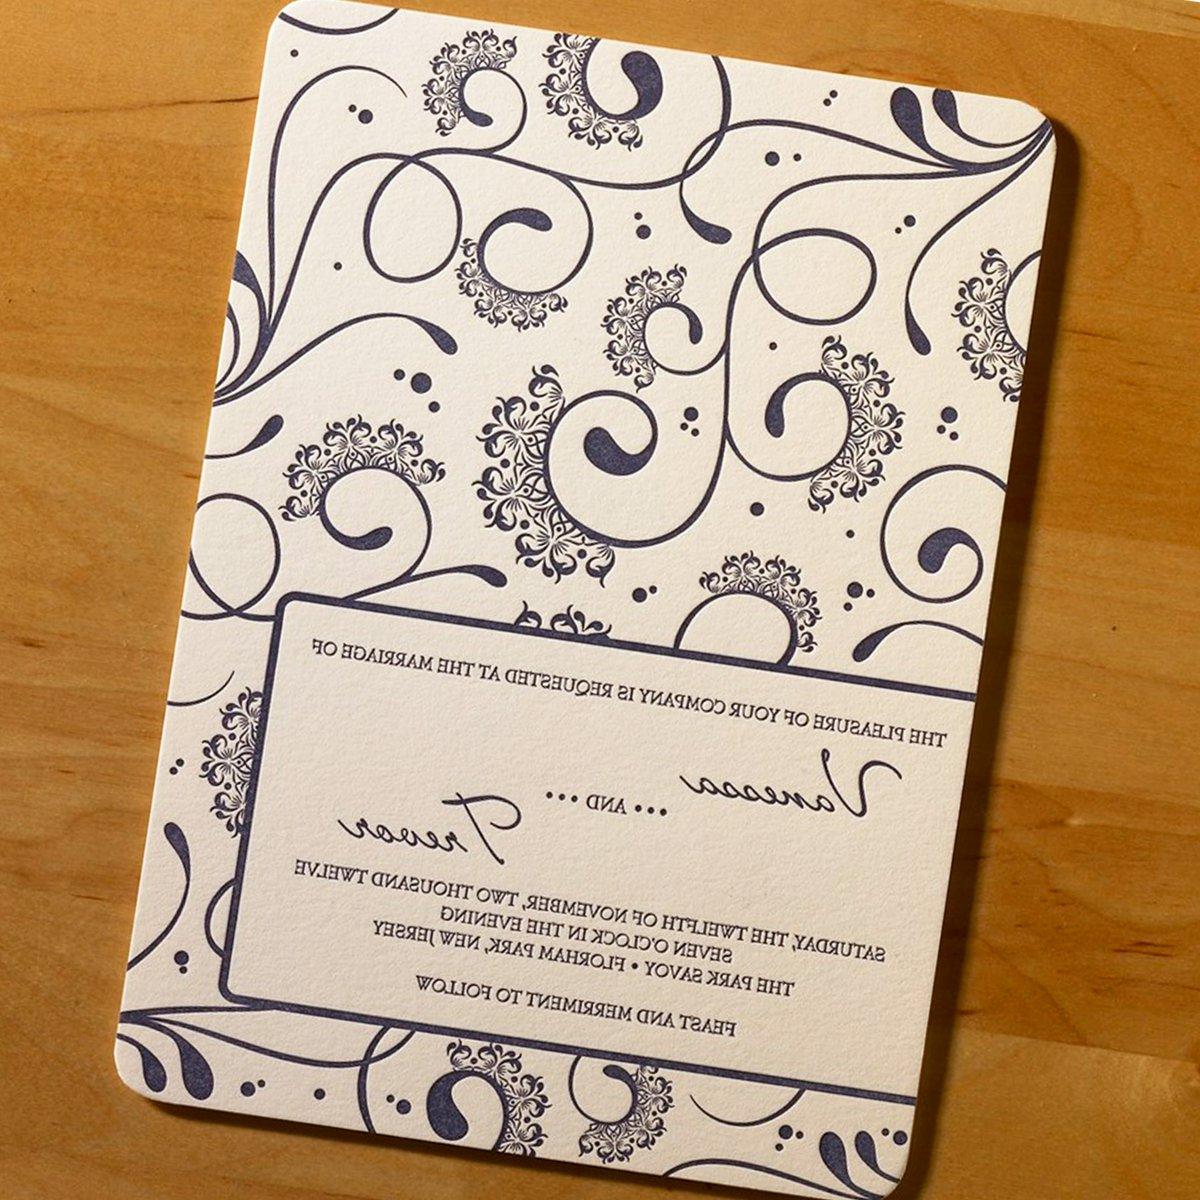 This impressive letterpress wedding invitation features vivacious swirls